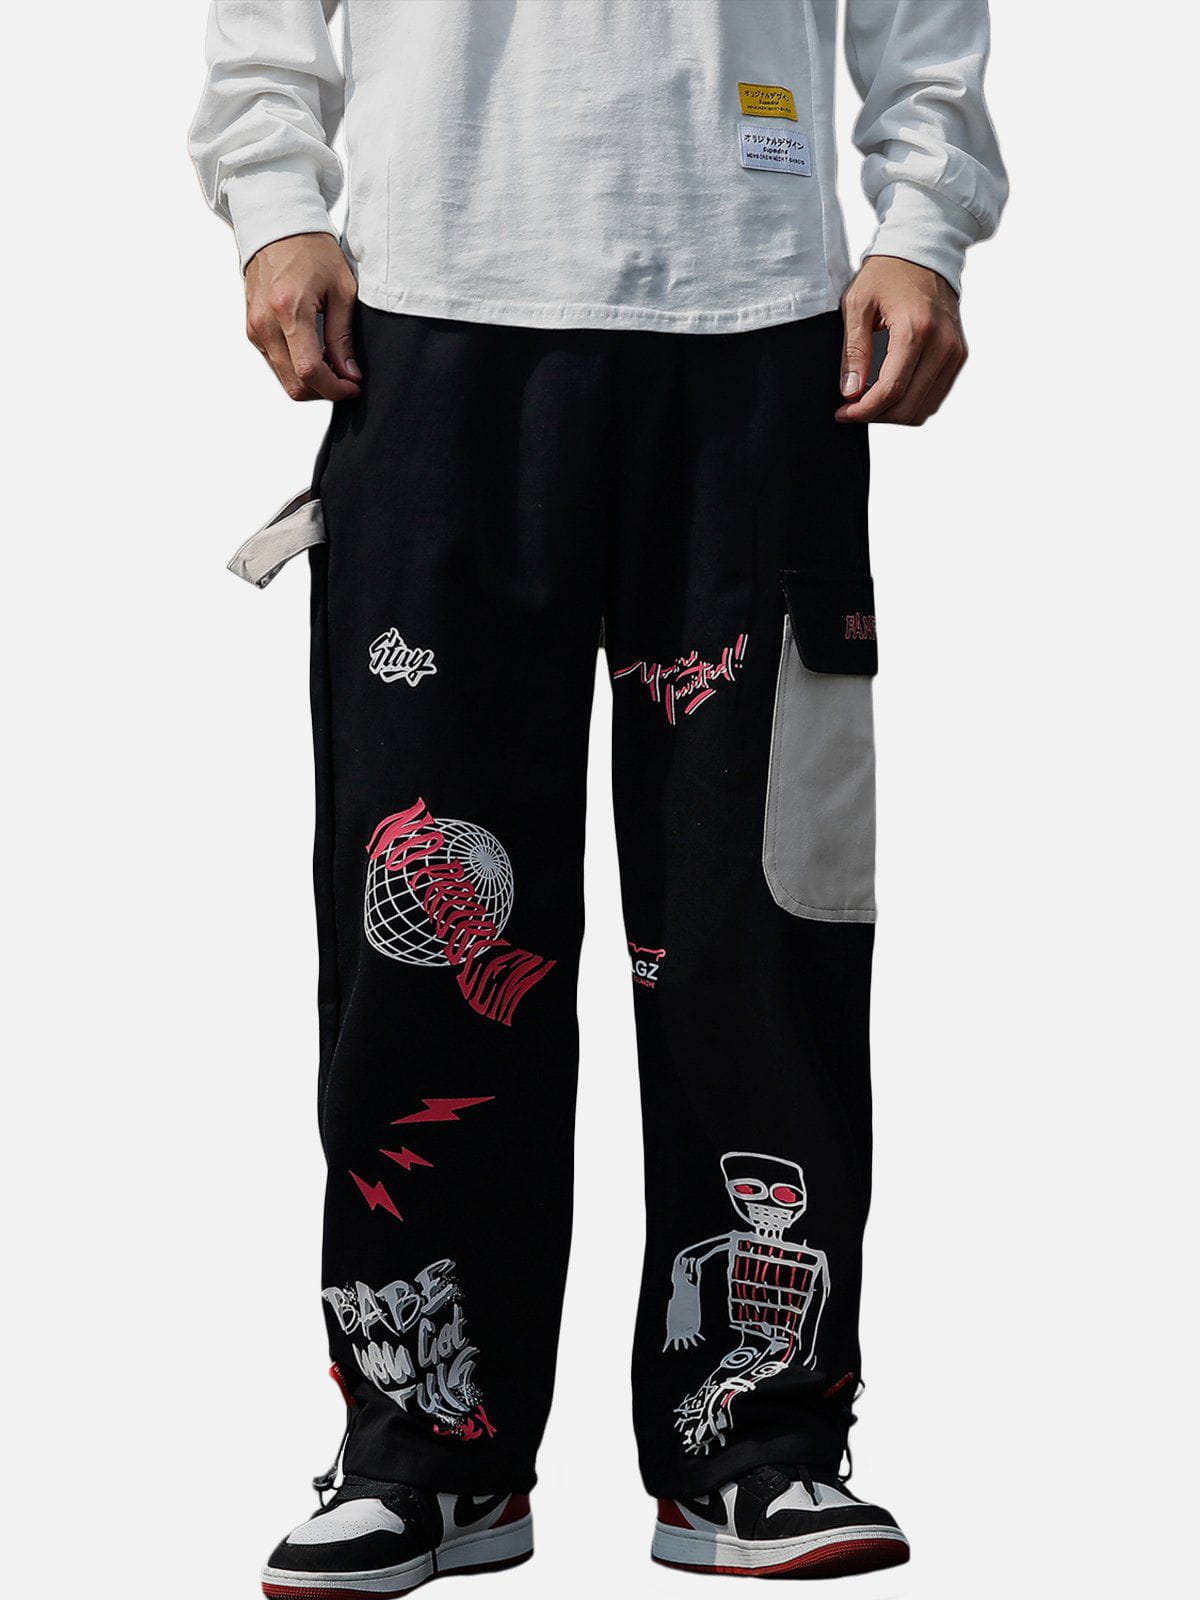 Majesda® - Graffiti Foam Print Cargo Pants outfit ideas streetwear fashion